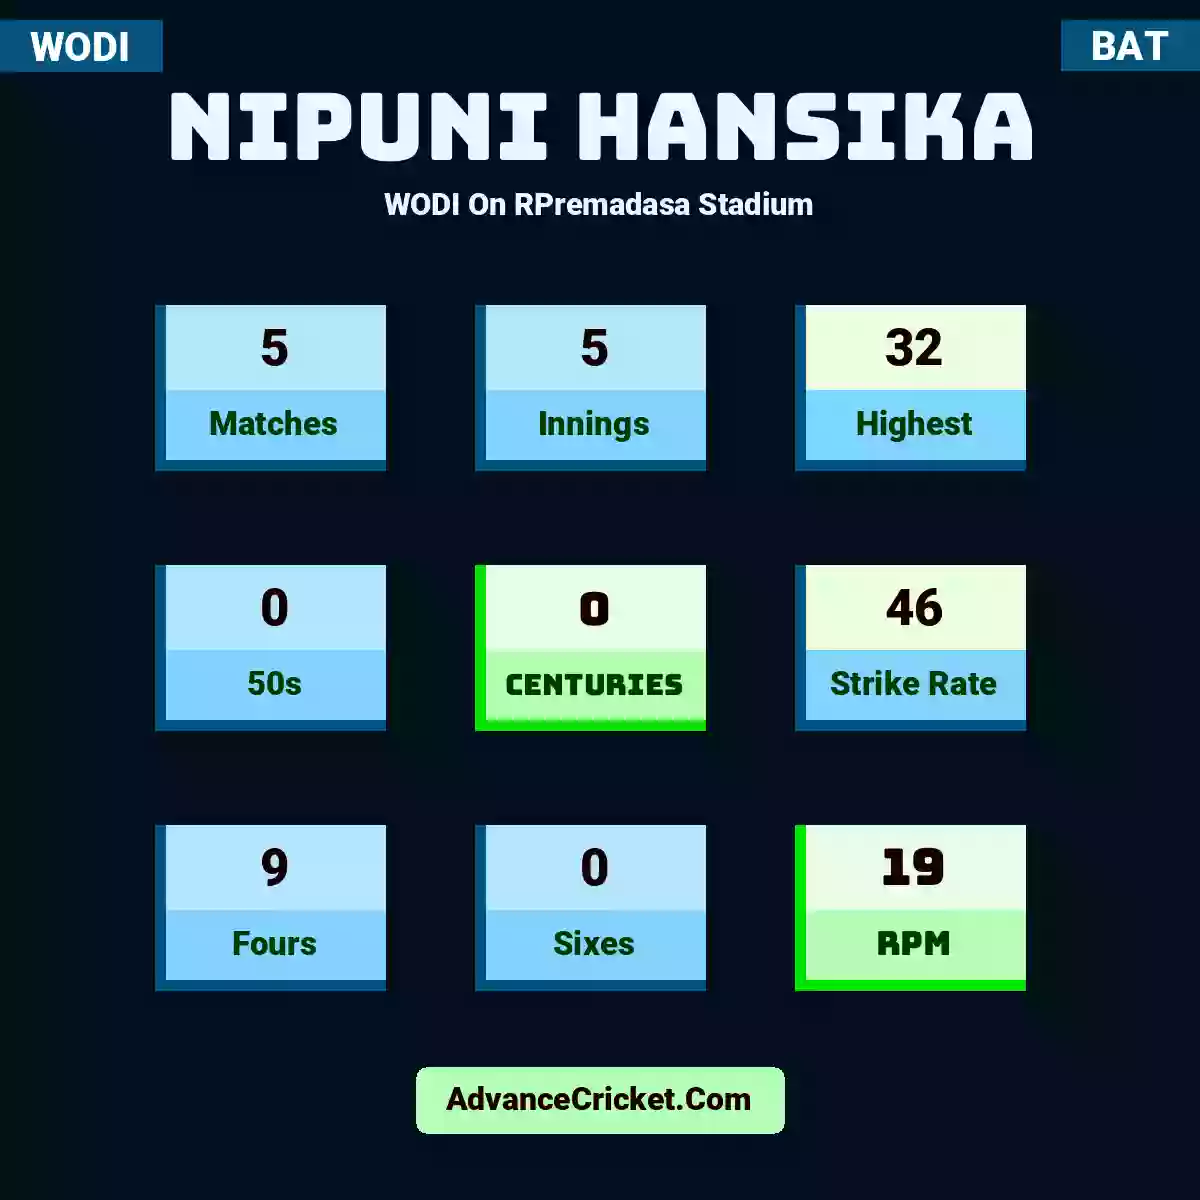 Nipuni Hansika WODI  On RPremadasa Stadium, Nipuni Hansika played 5 matches, scored 32 runs as highest, 0 half-centuries, and 0 centuries, with a strike rate of 46. N.Hansika hit 9 fours and 0 sixes, with an RPM of 19.